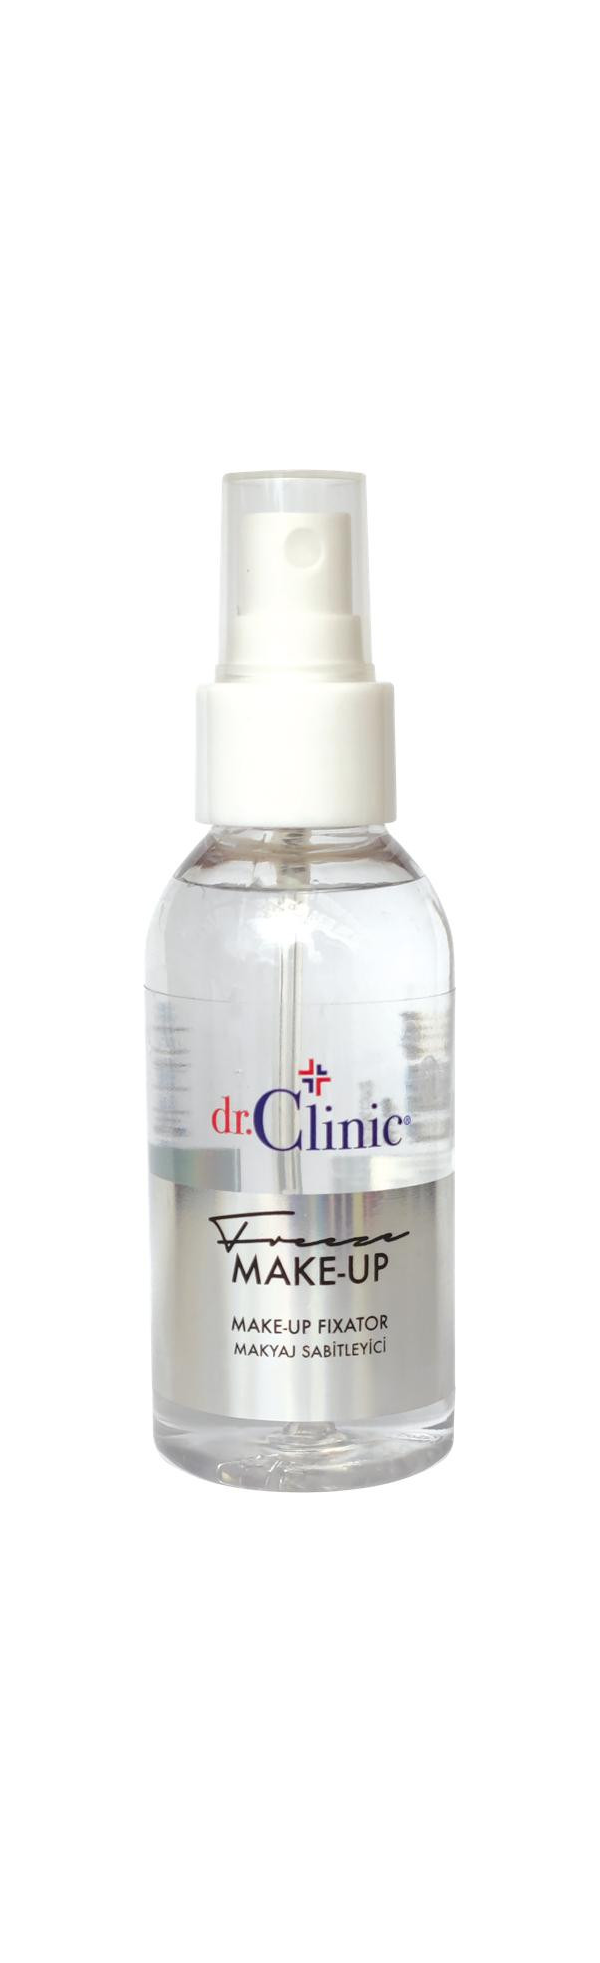 Dr.Clinic Make-Up Fıxator